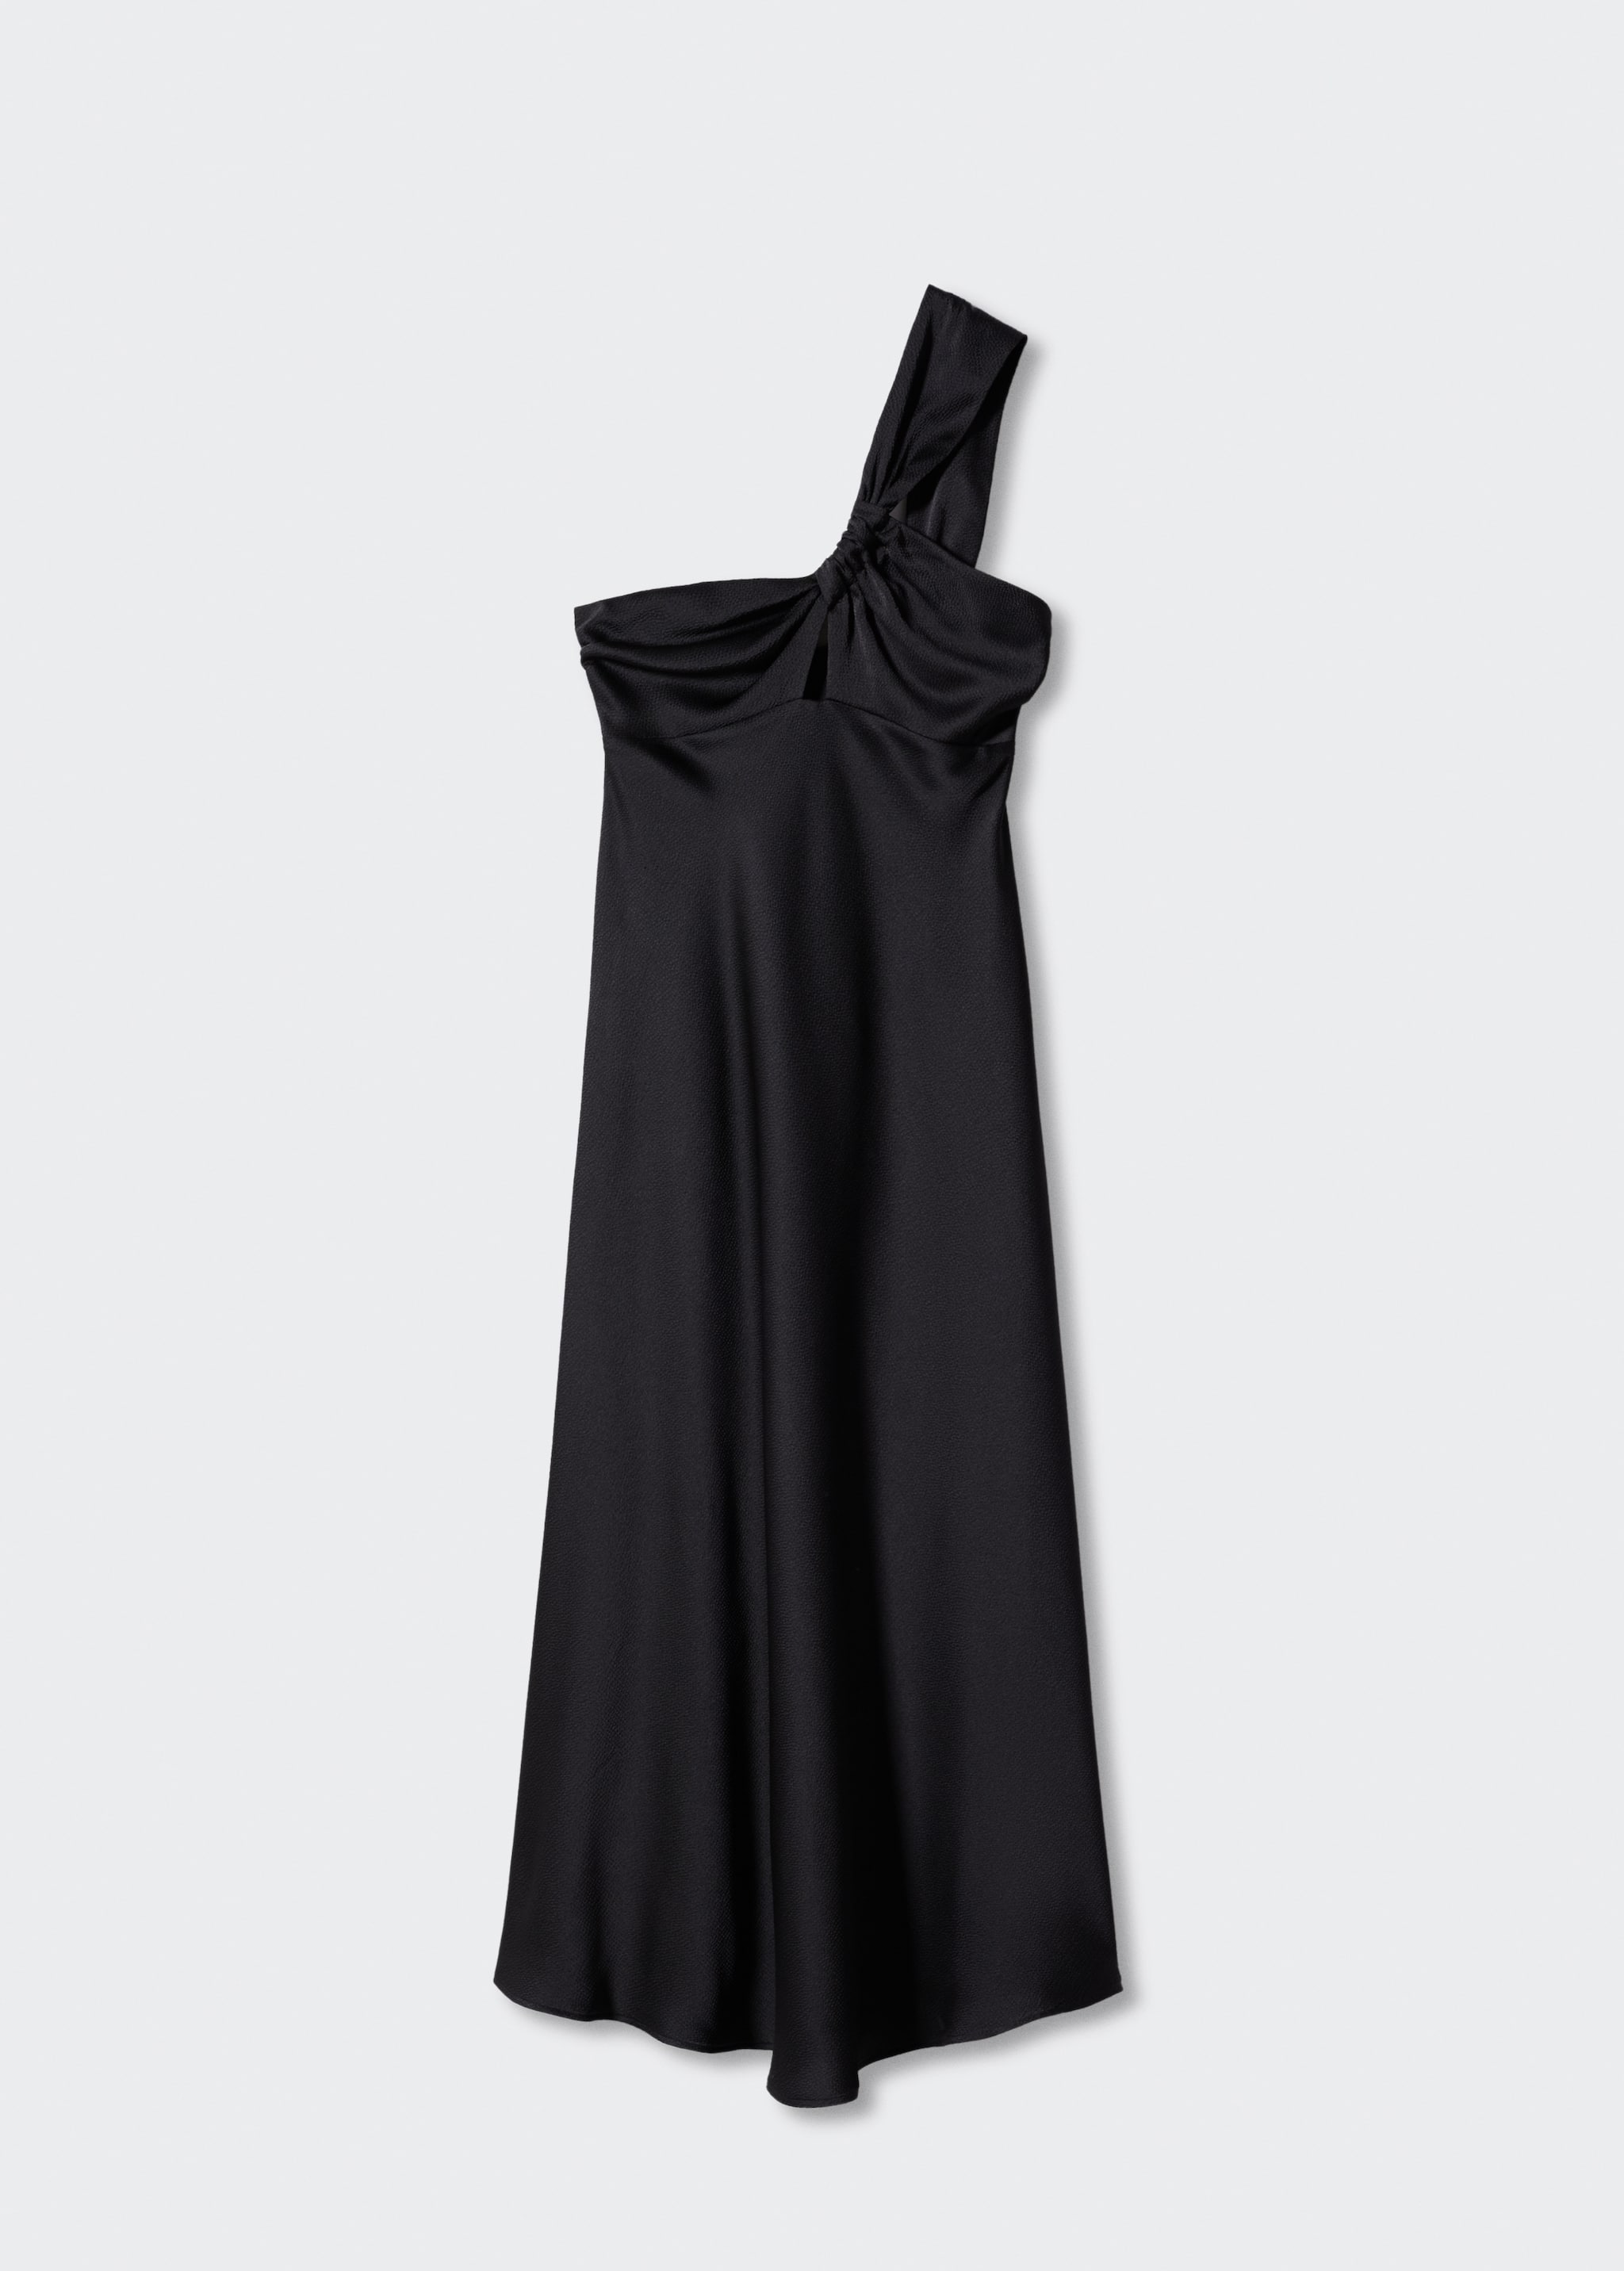 Asymmetrical black satin dress - Article without model